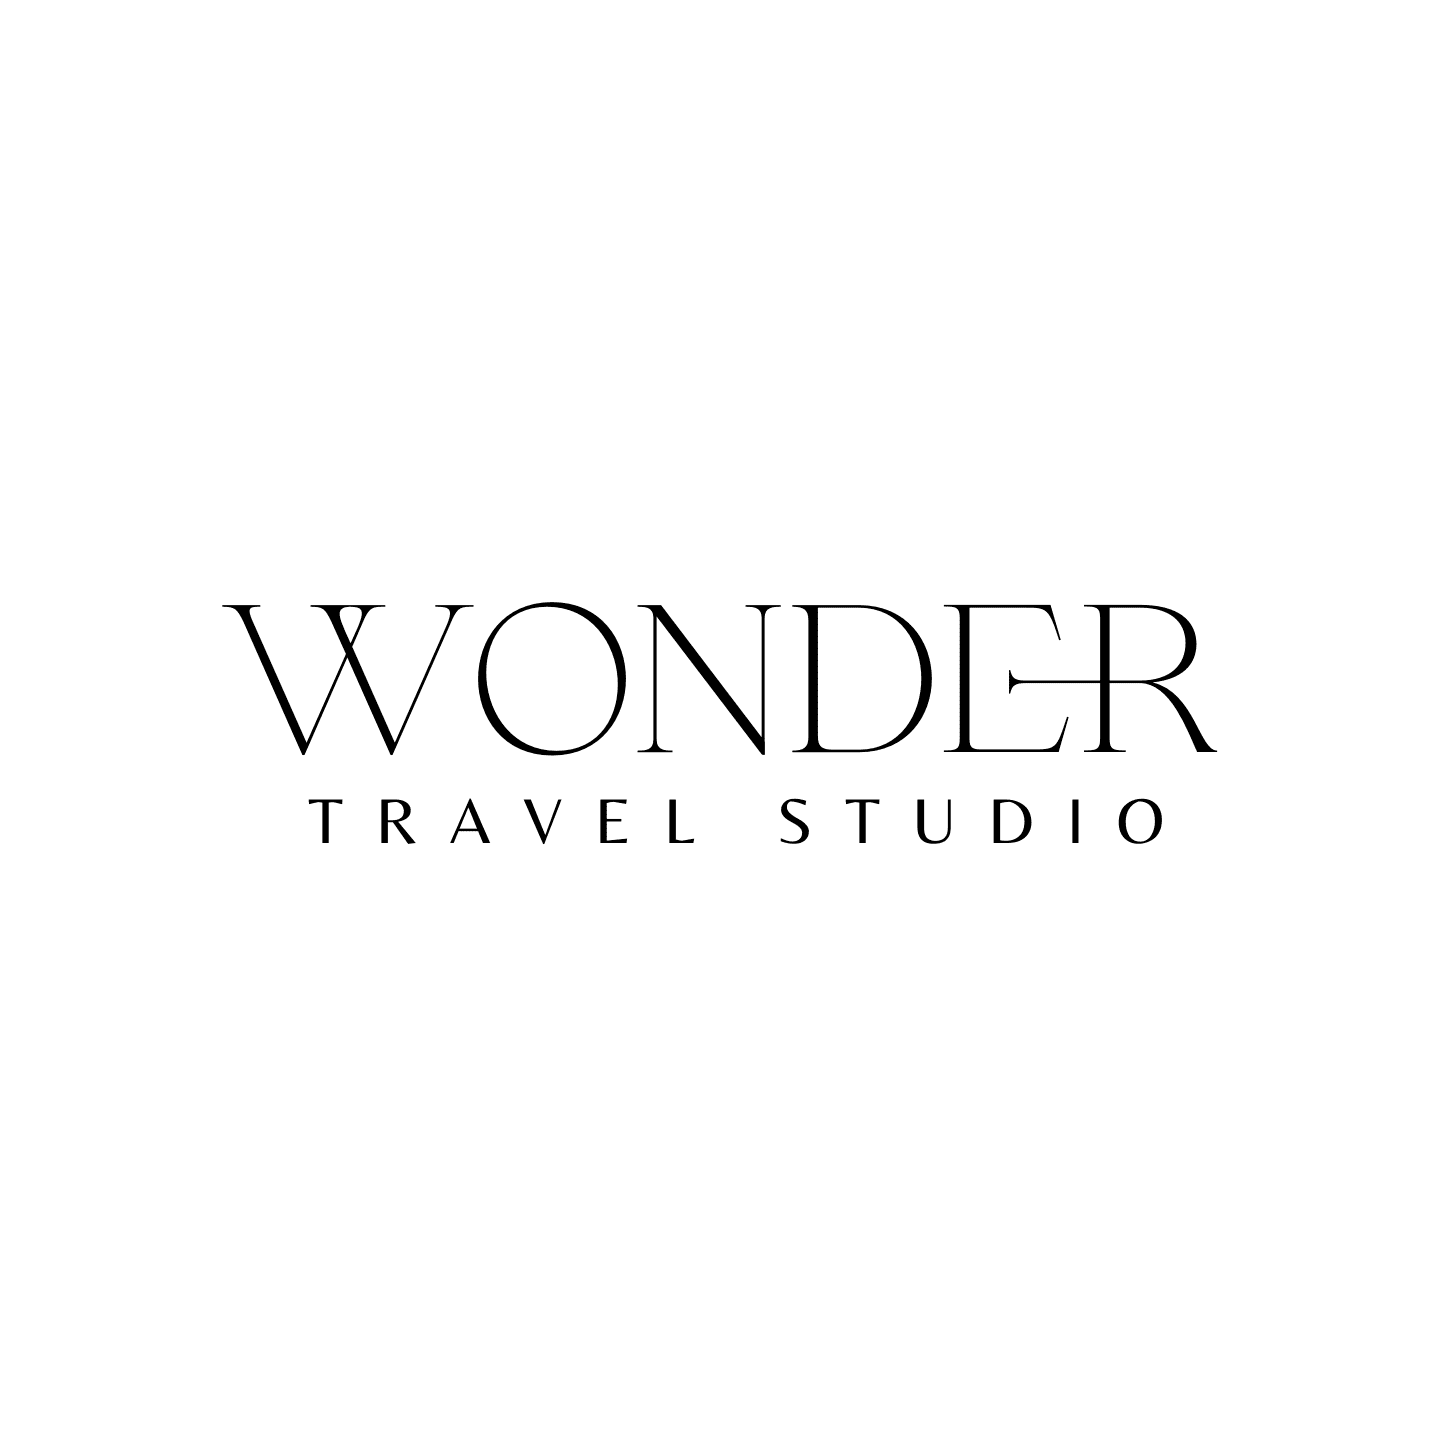 Wonder Travel Studio